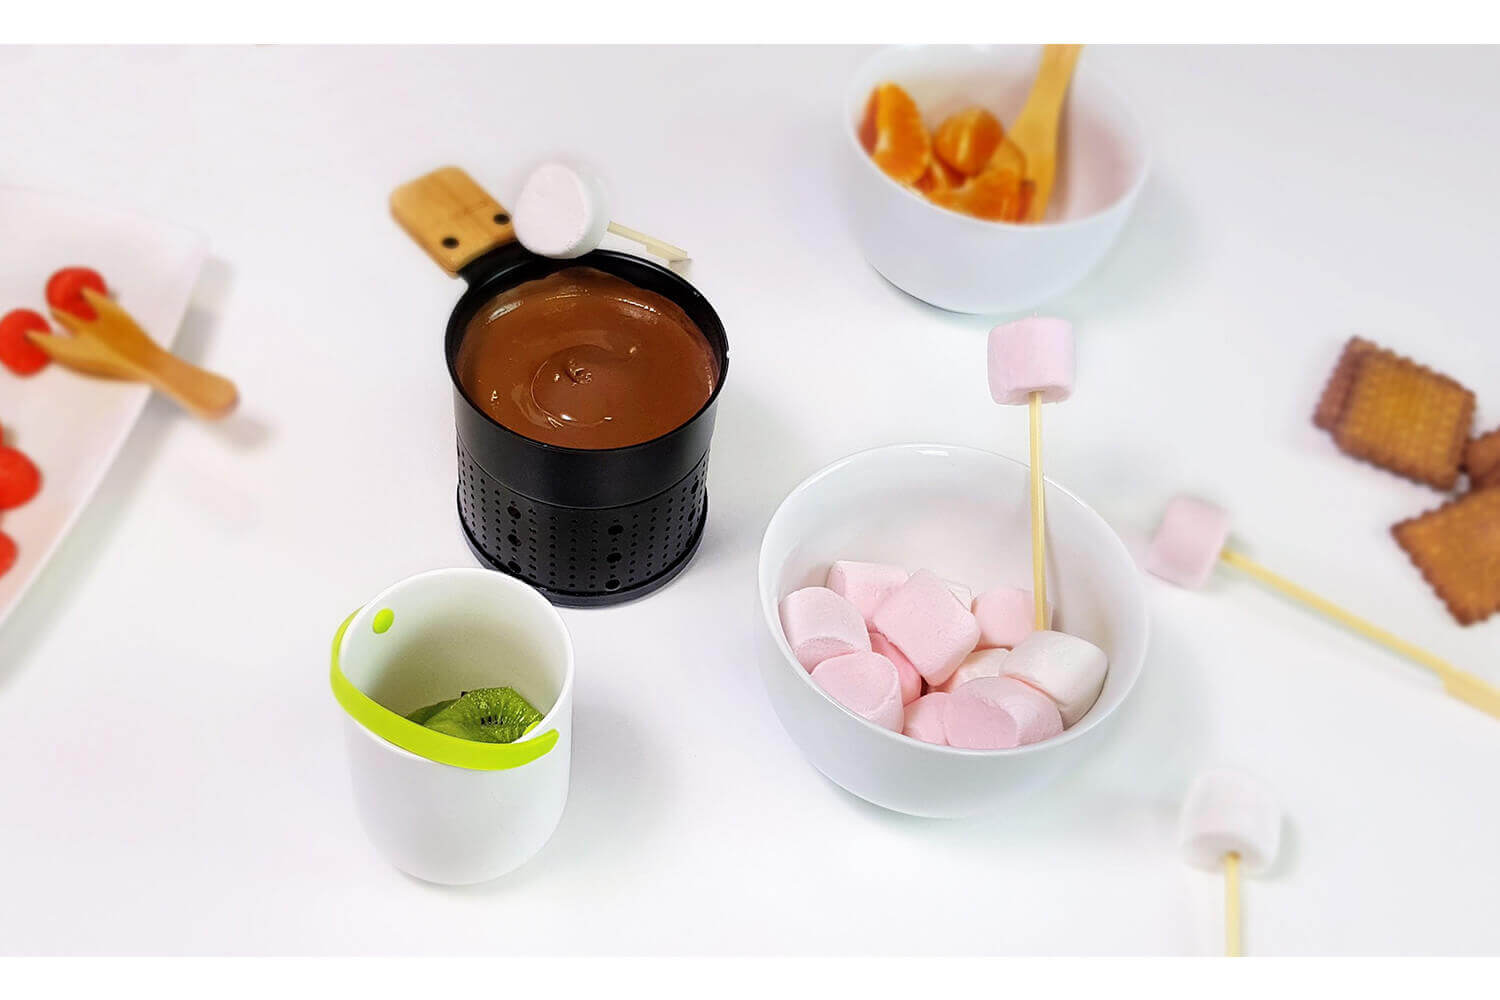 Lumi Choco  La fondue au chocolat à la bougie